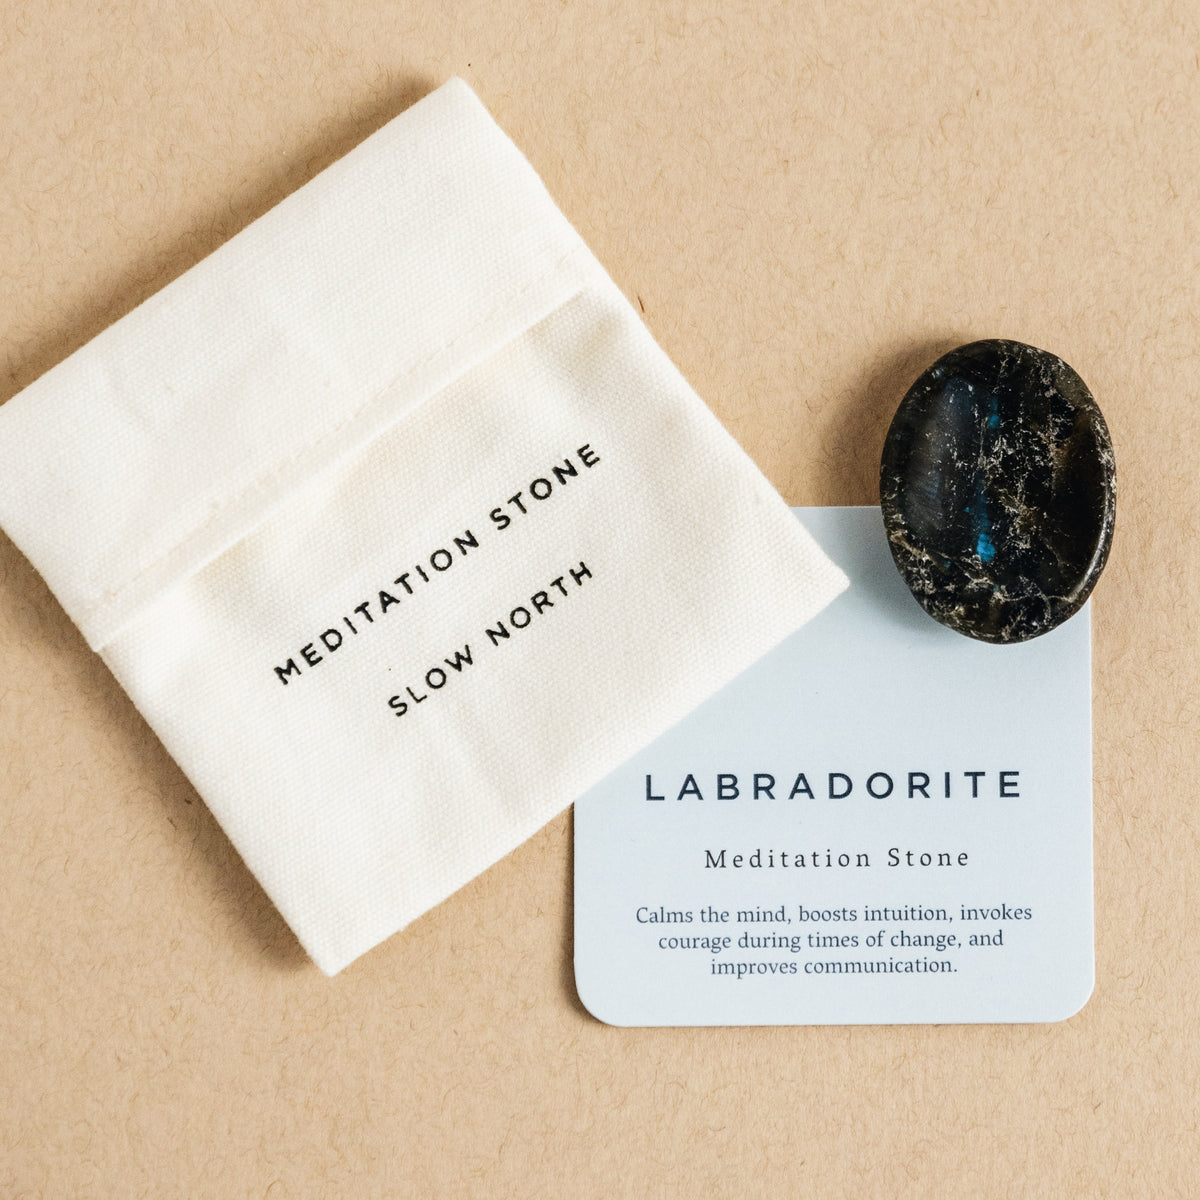 Labradorite - Meditation Stone